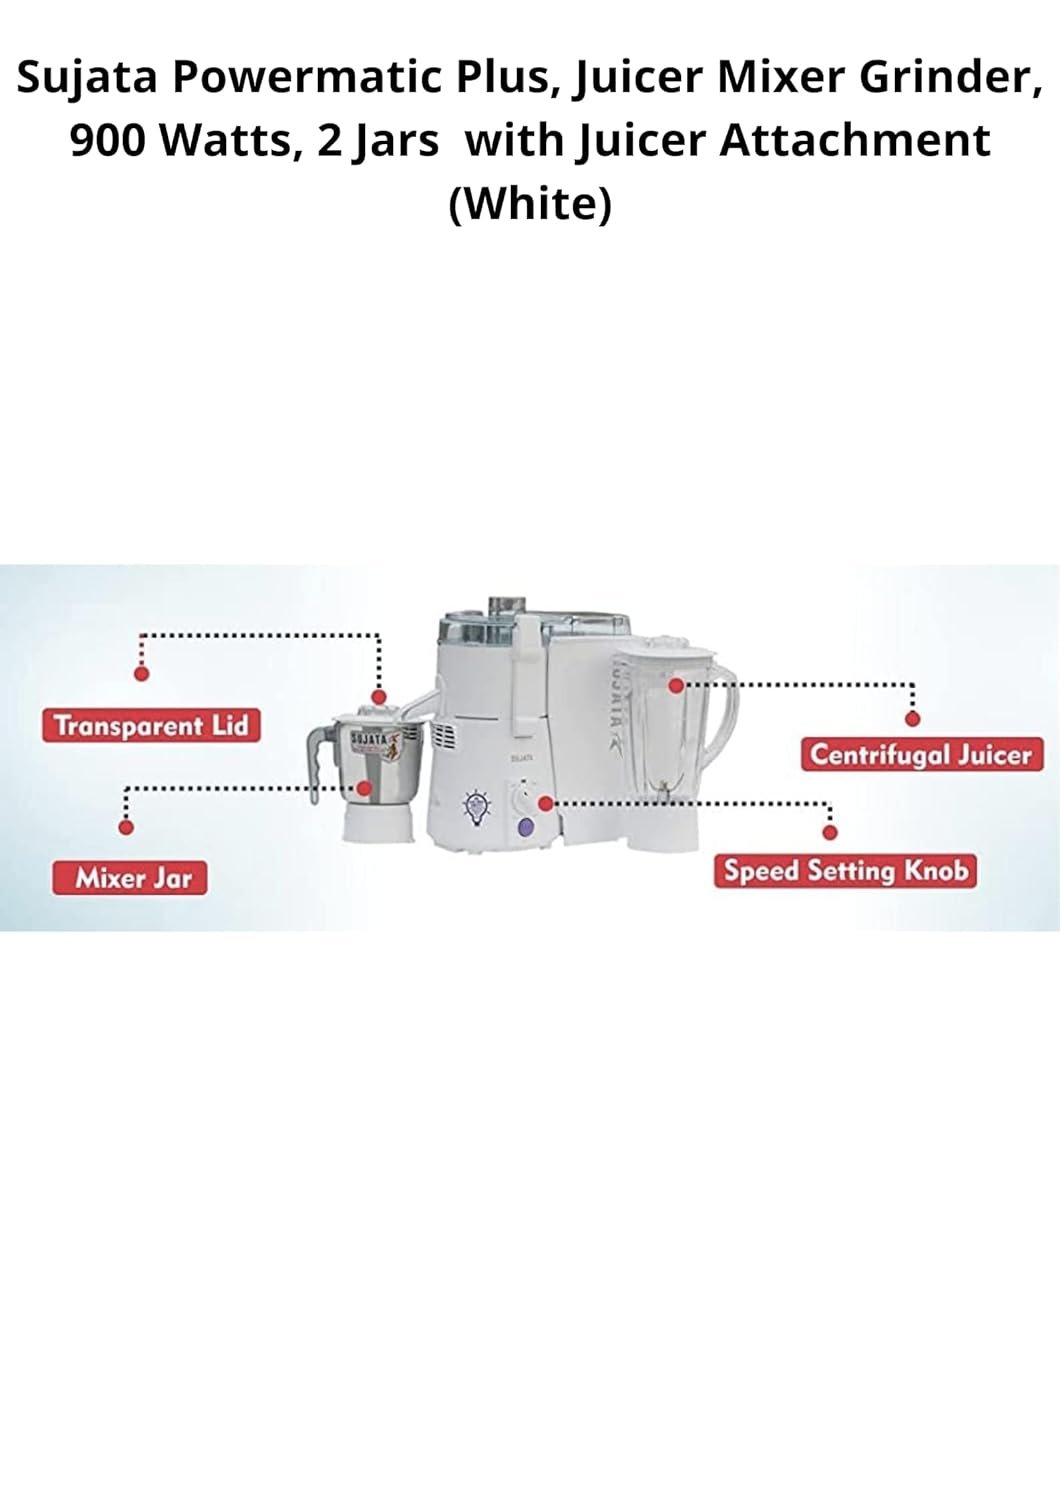 SUJATA 900 Watt Powermatic Plus Juicer Mixer Grinder with Bag (White)